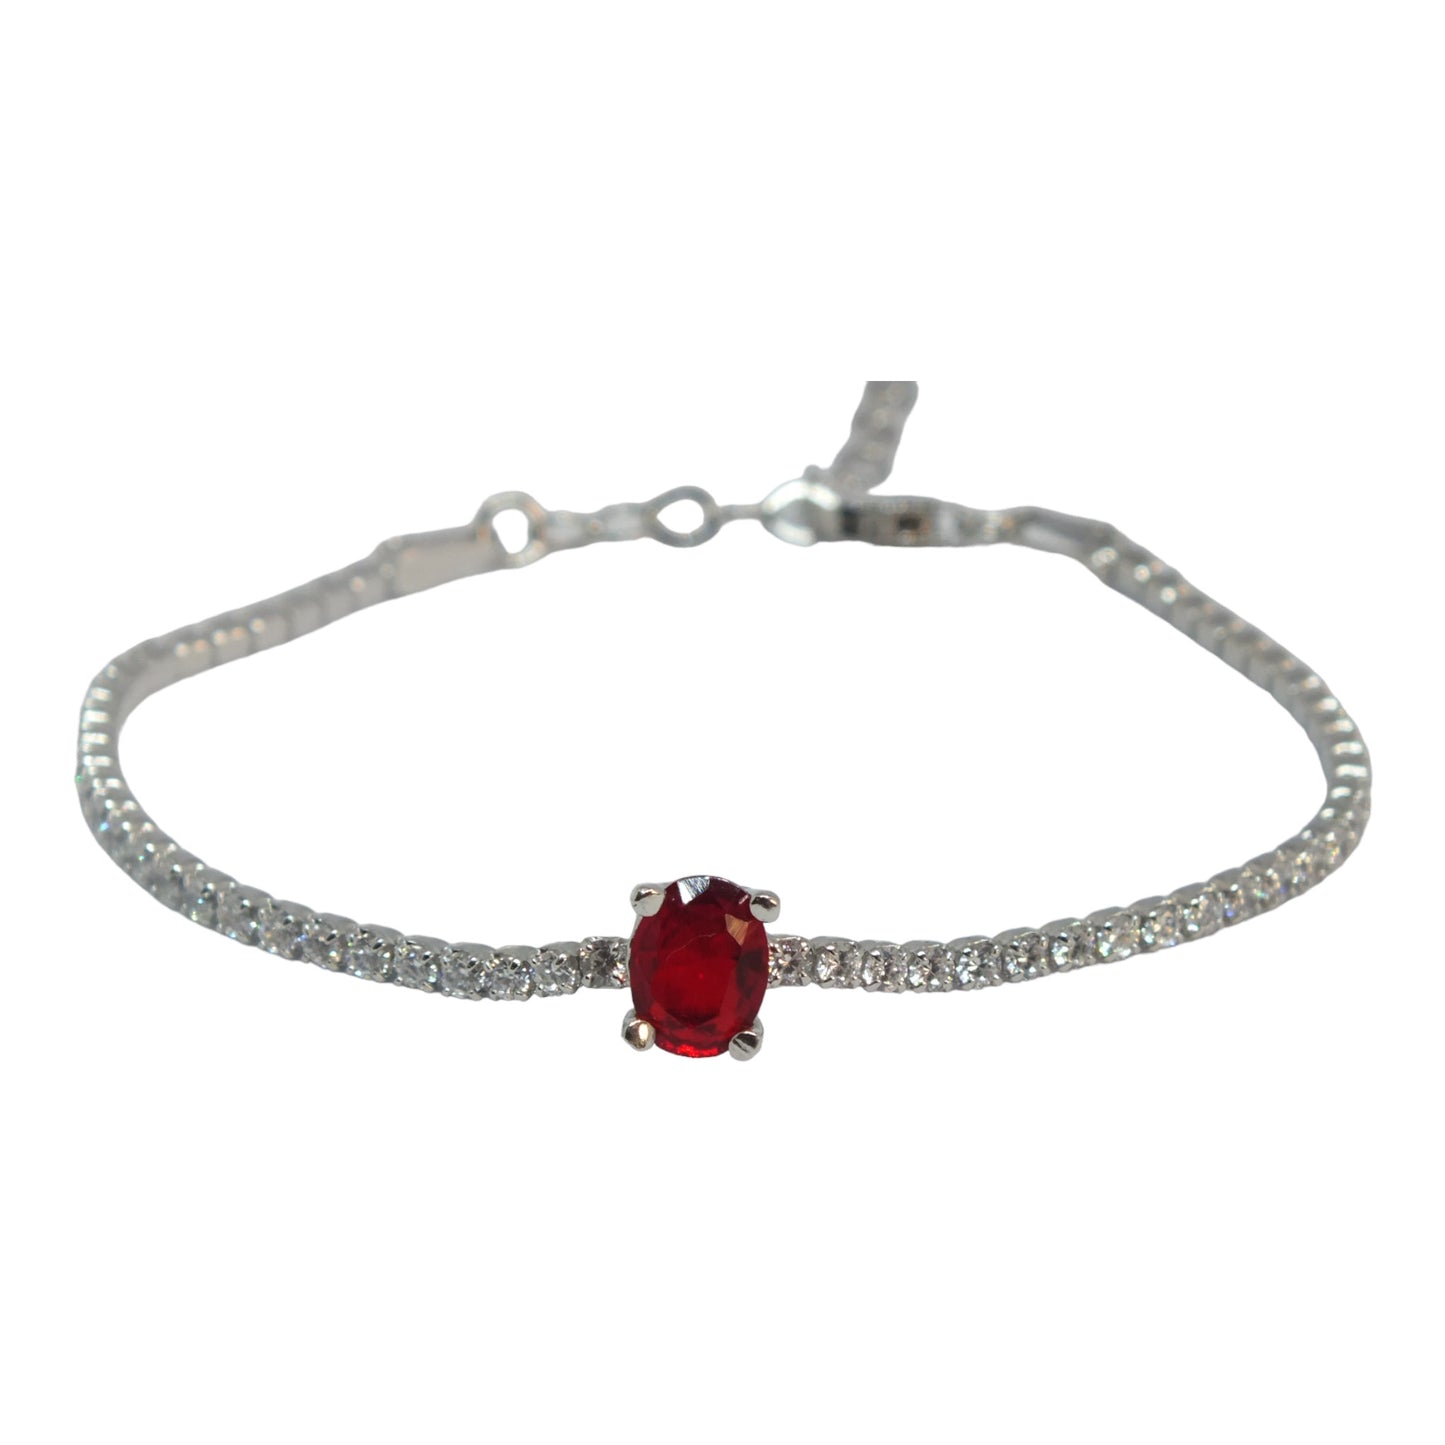 Silver Tennis Bracelet with Red Stone- اسوارة تنس فضة مع حجر احمر